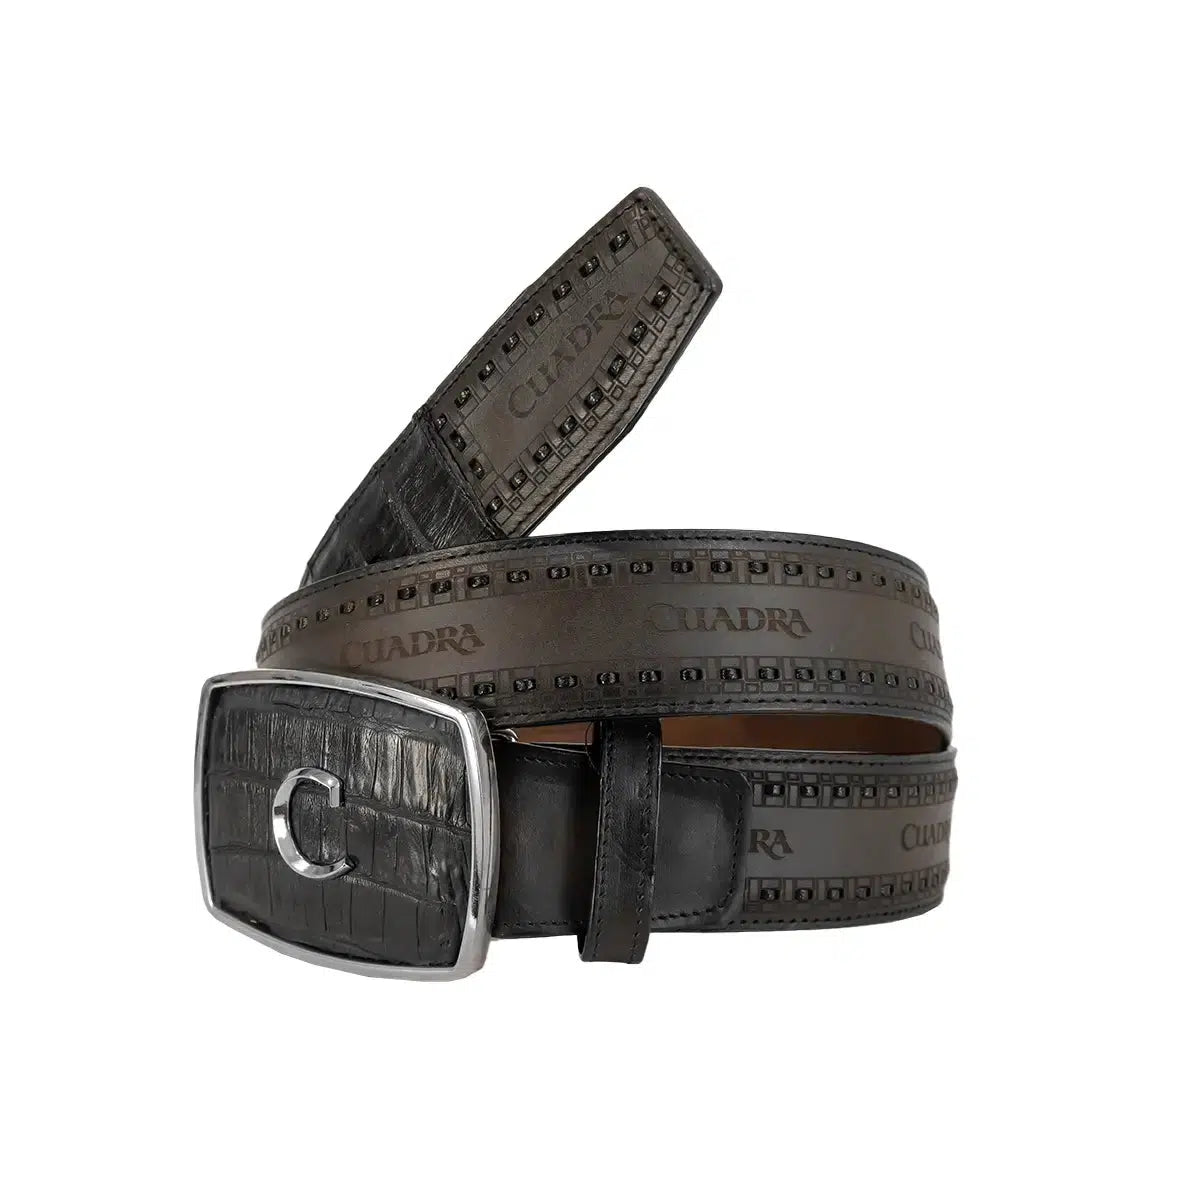 CV397FC - Cuadra black cowboy western fuscus leather belt for men.-Kuet.us